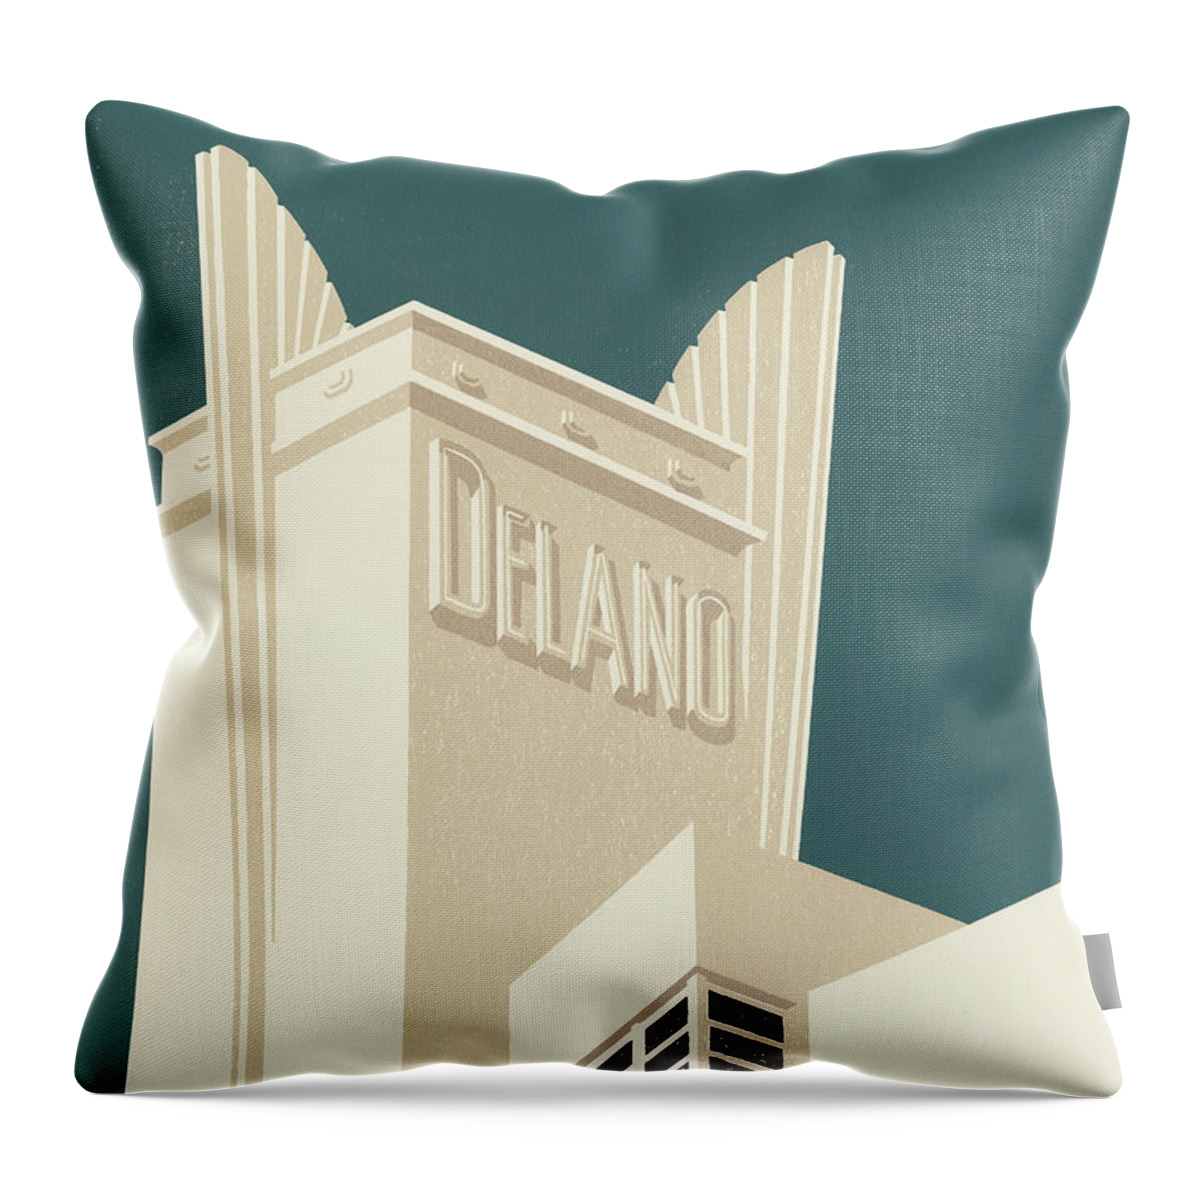 Delano Throw Pillow featuring the digital art Delano #1 by Mary Lynn Blasutta